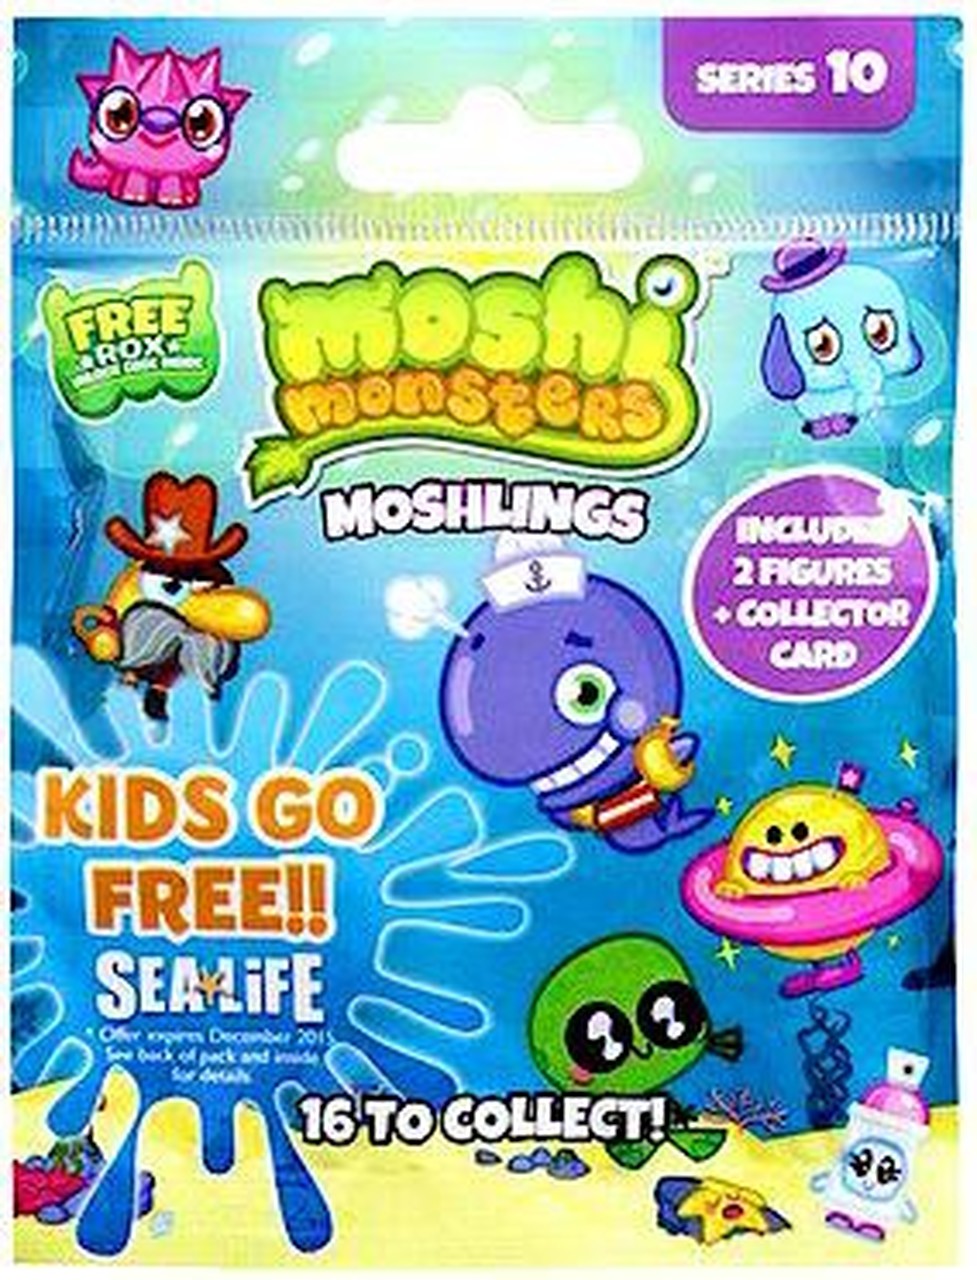 Moshi monsters series 10 2